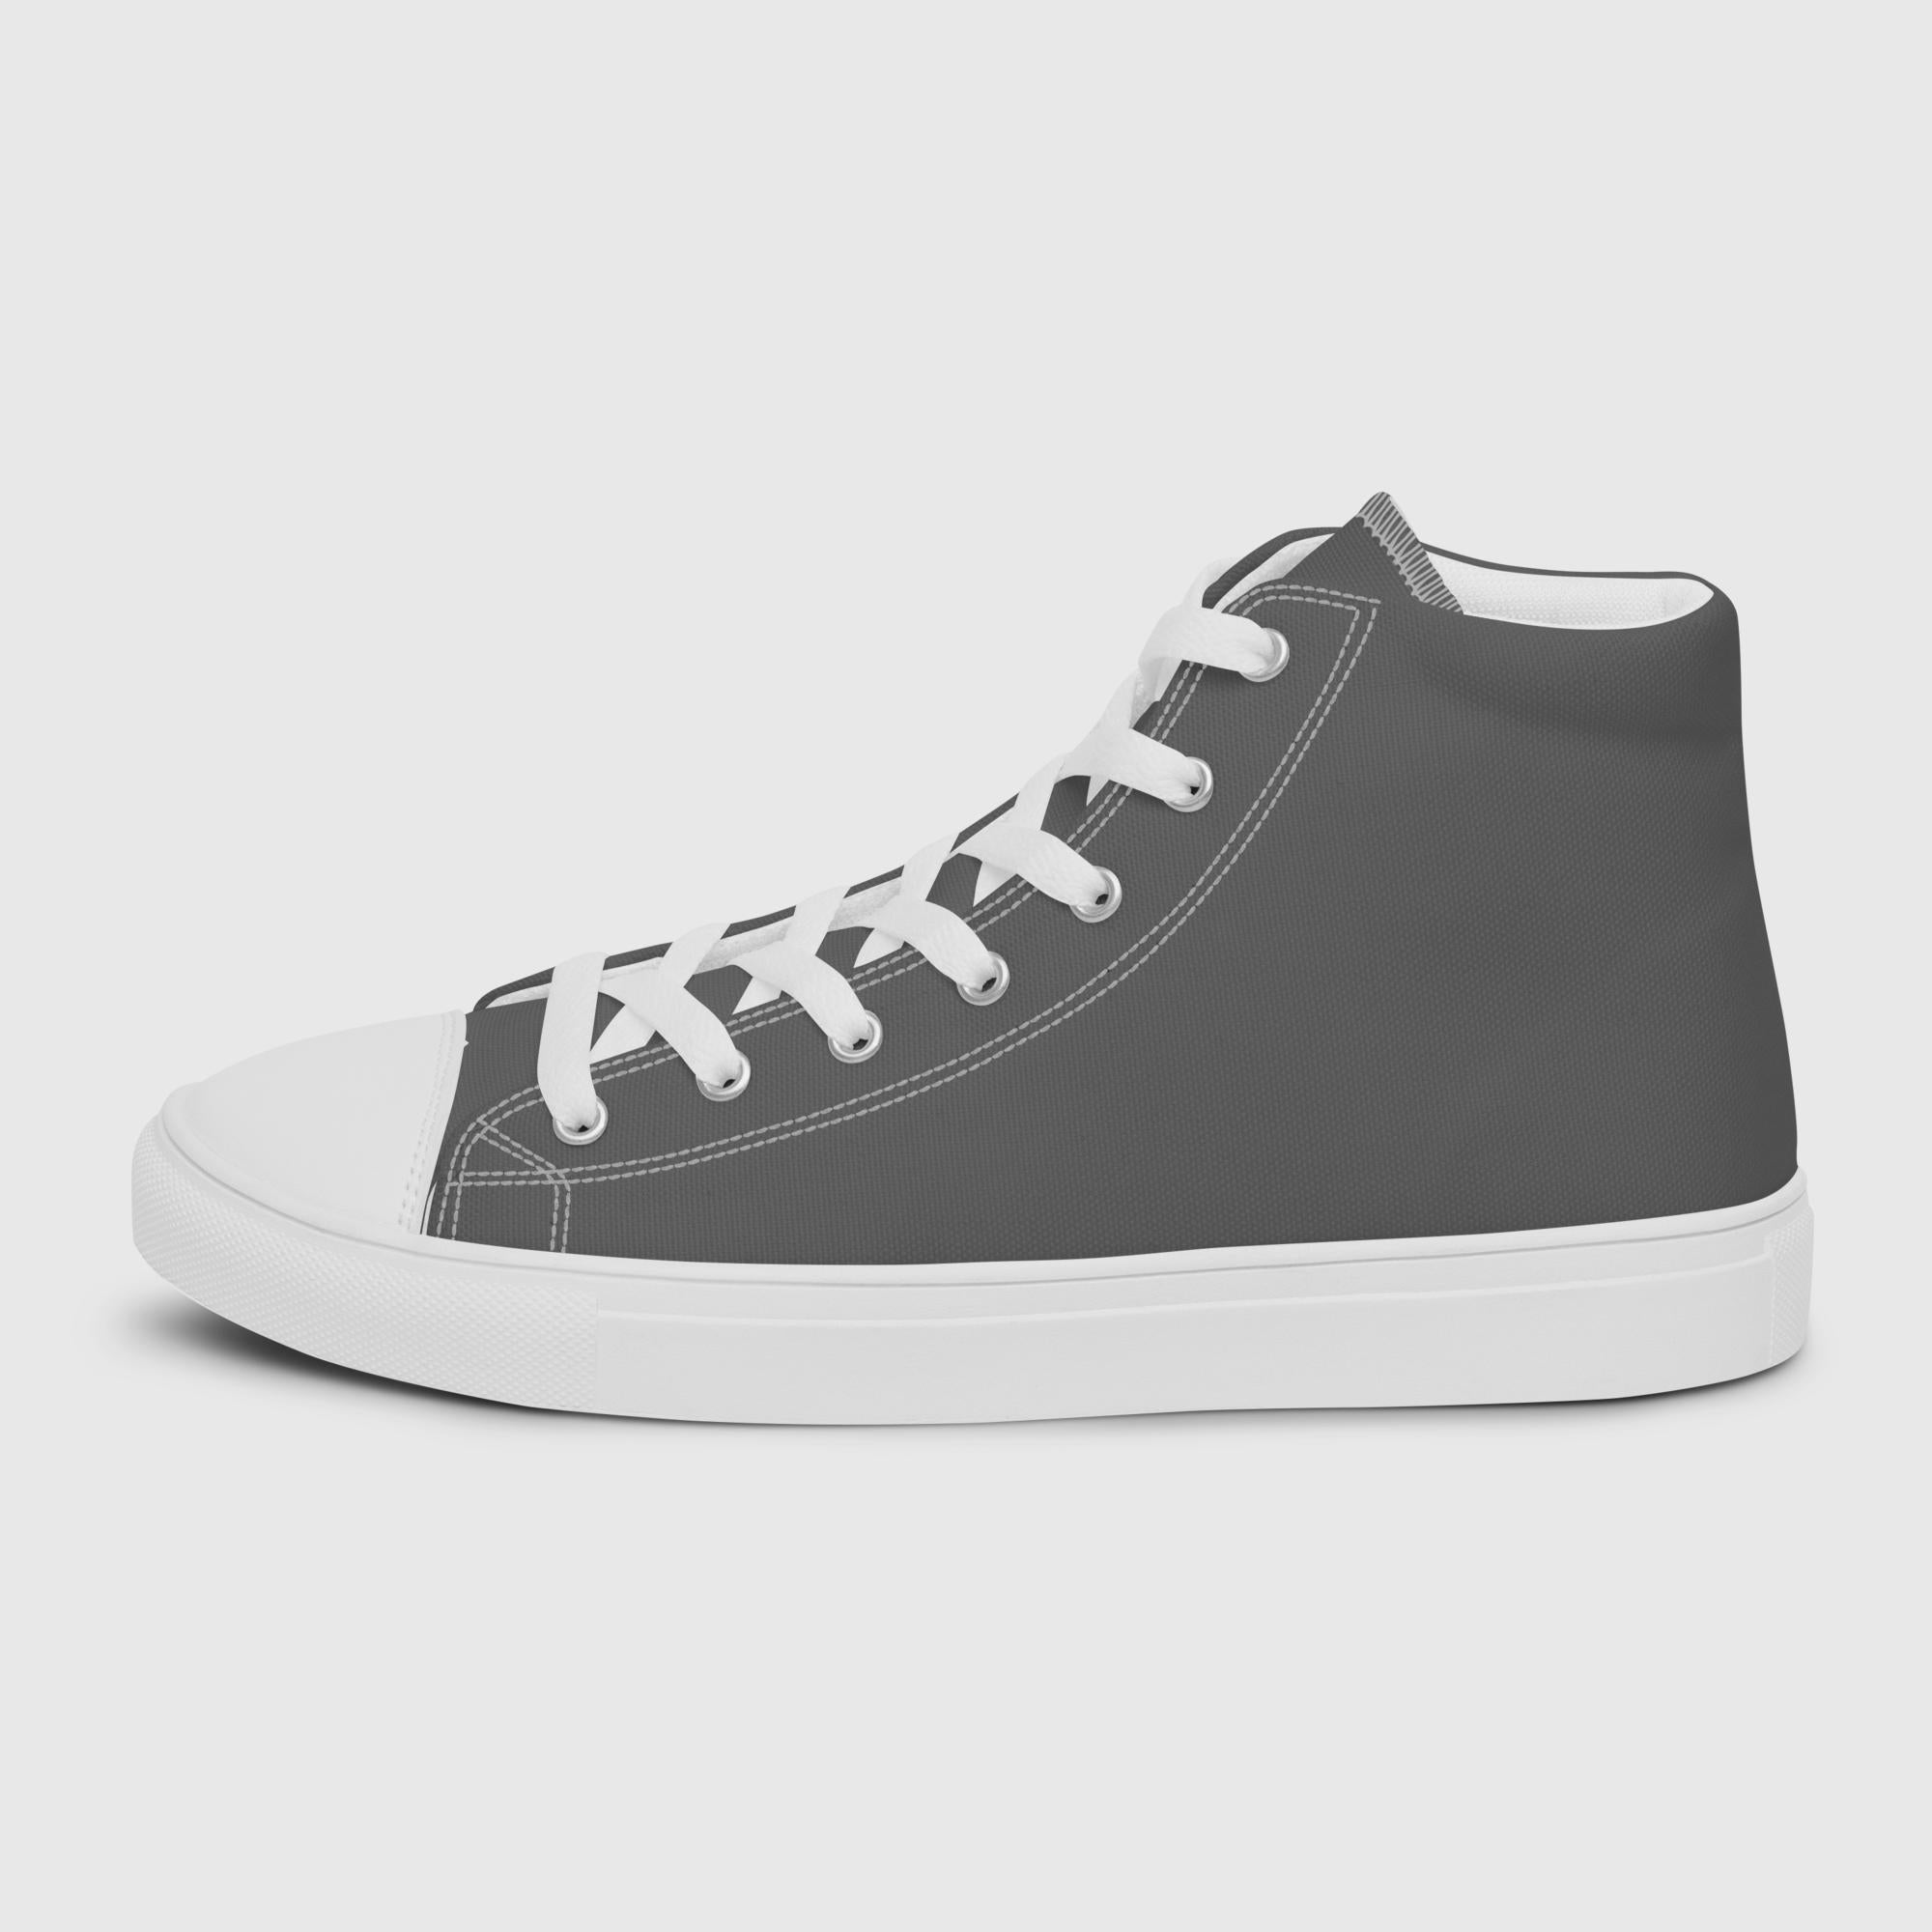 Men’s high top canvas shoes - Grey